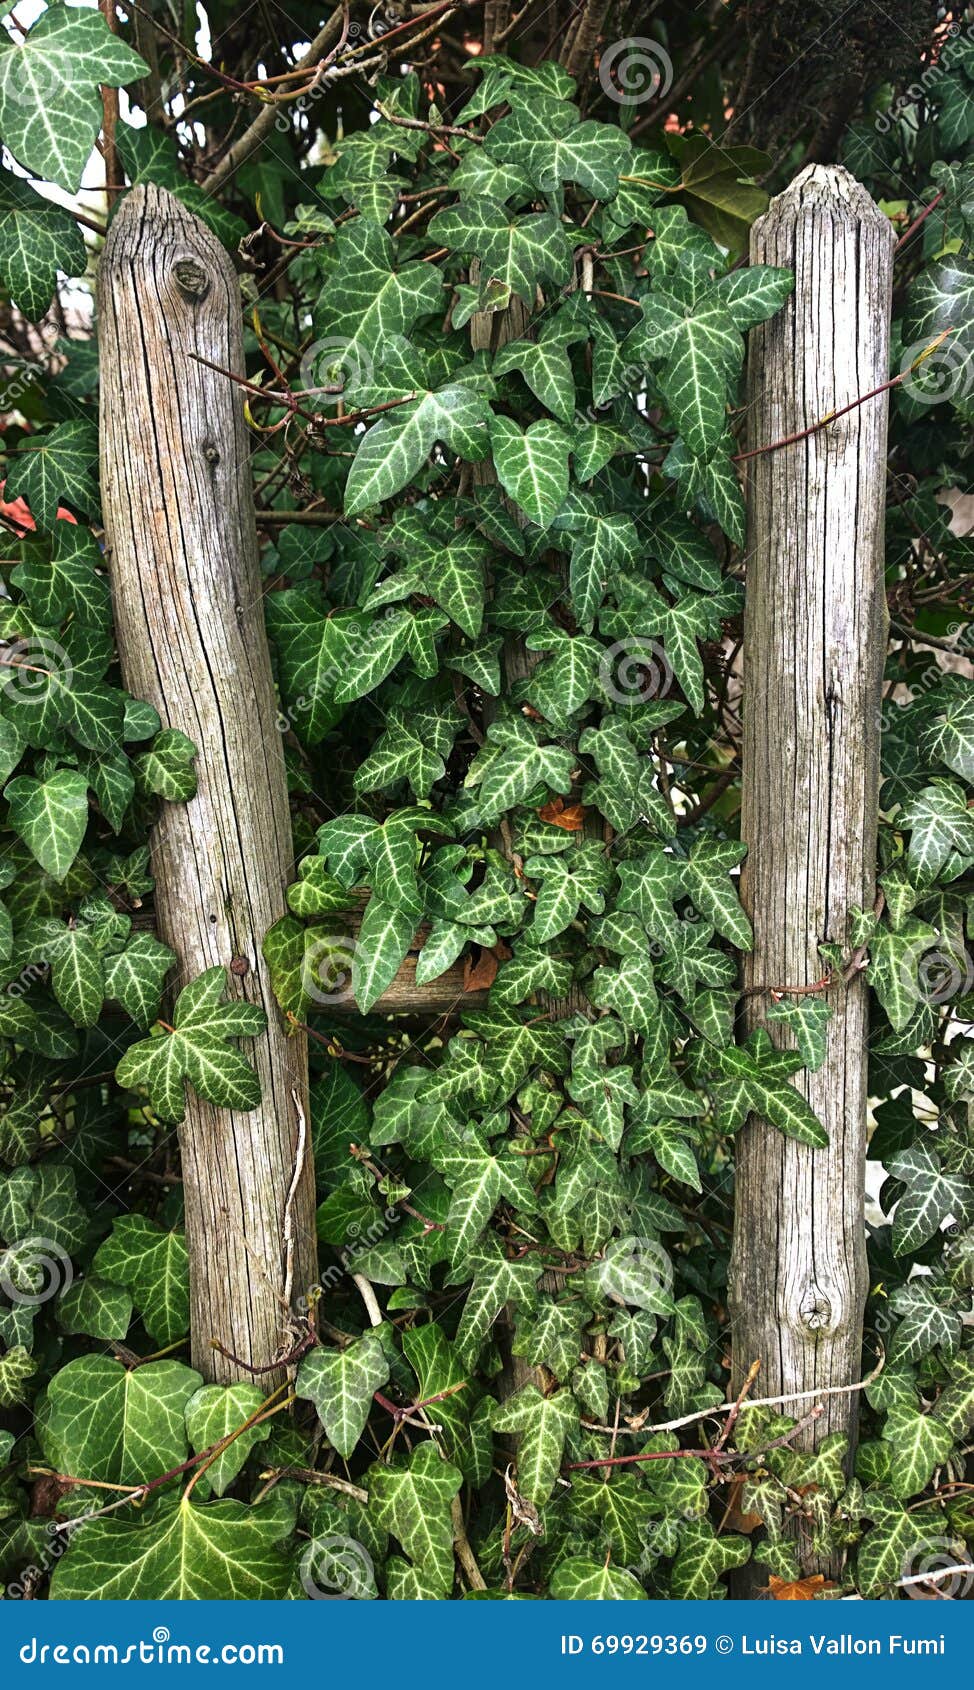 Ivy Lush Leaves Climbing on Wooden Grunge Fence Stock Image - Image of ...